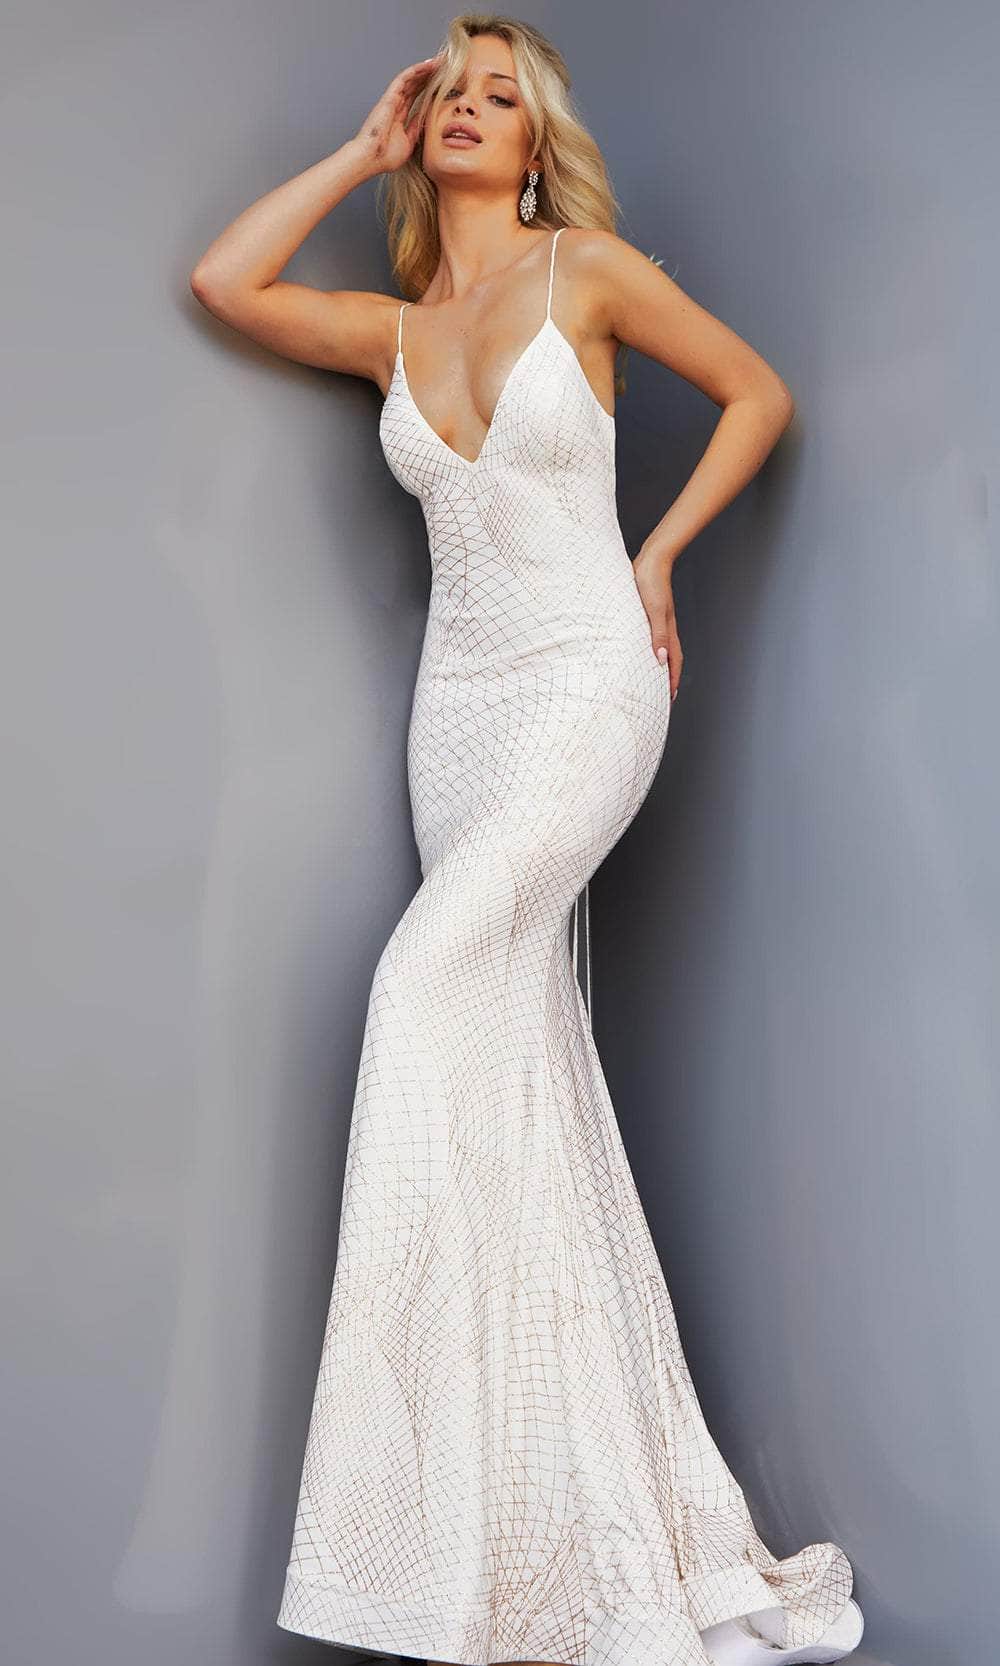 Jovani 05960 - Plunging V-Neck Glitter Prom Dress Special Occasion Dress 00 / Off White/Gold